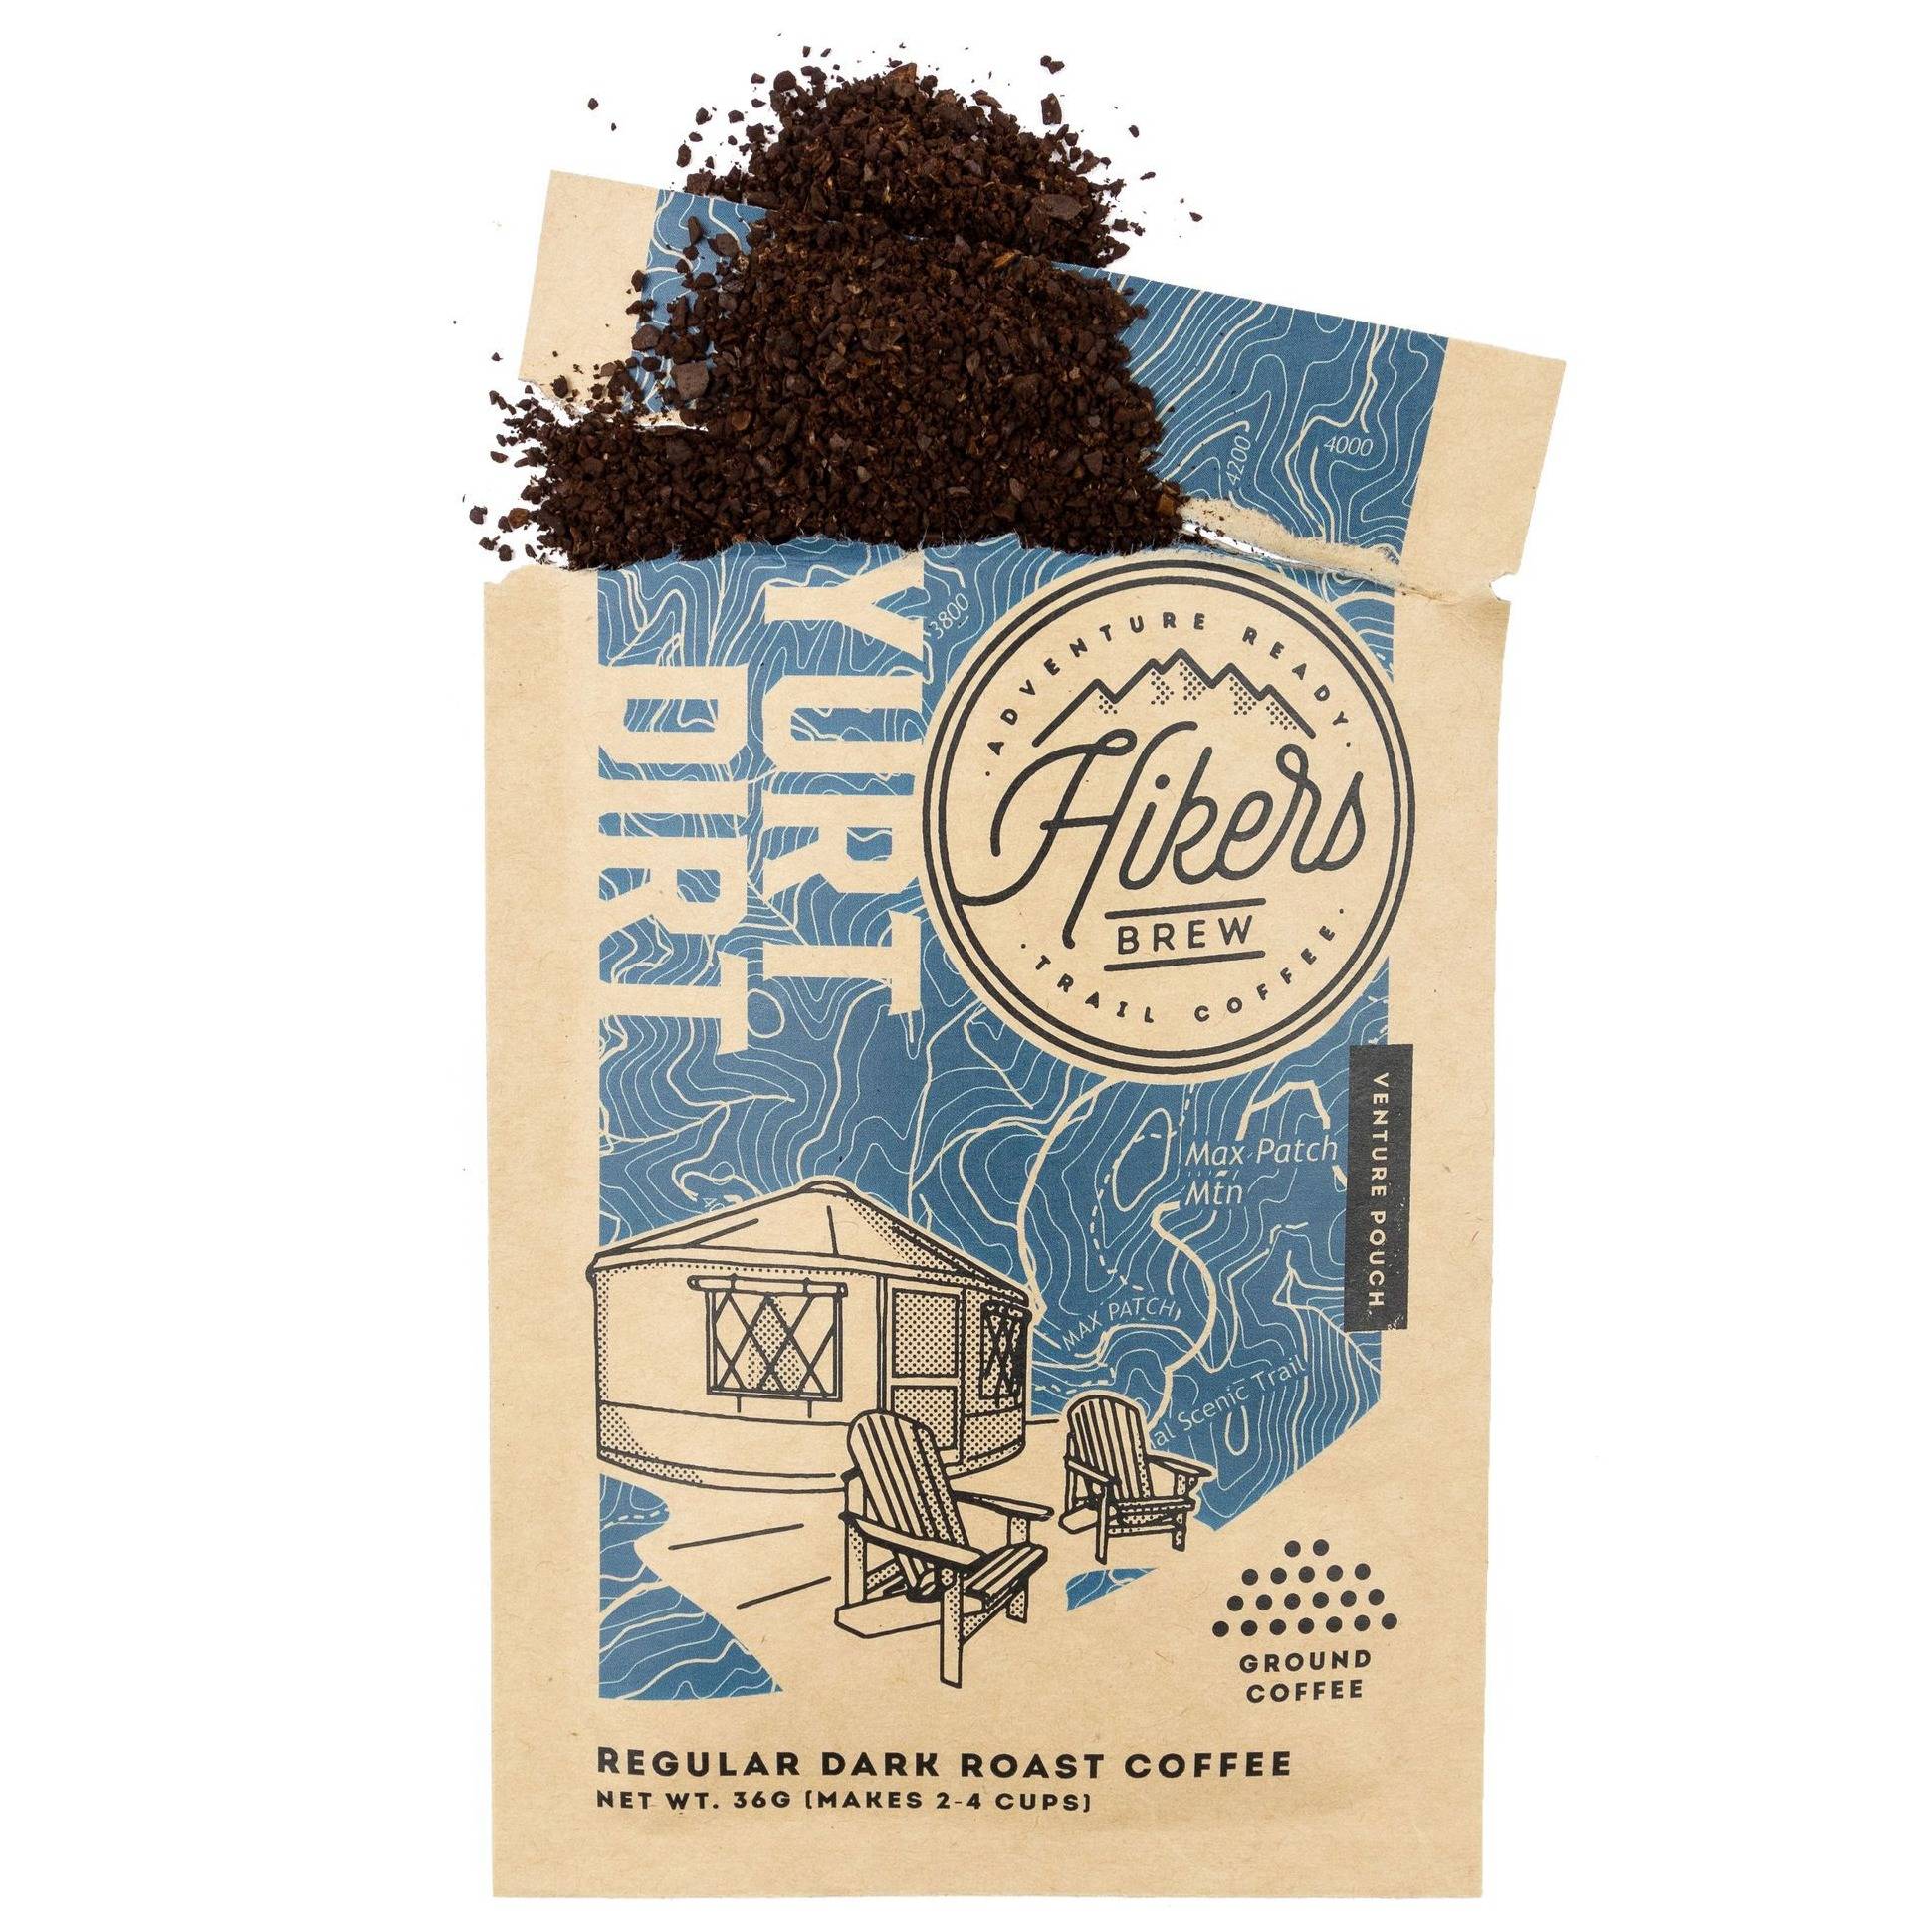 Yurt Dirt - Regular Dark Roast Coffee - 12 oz.